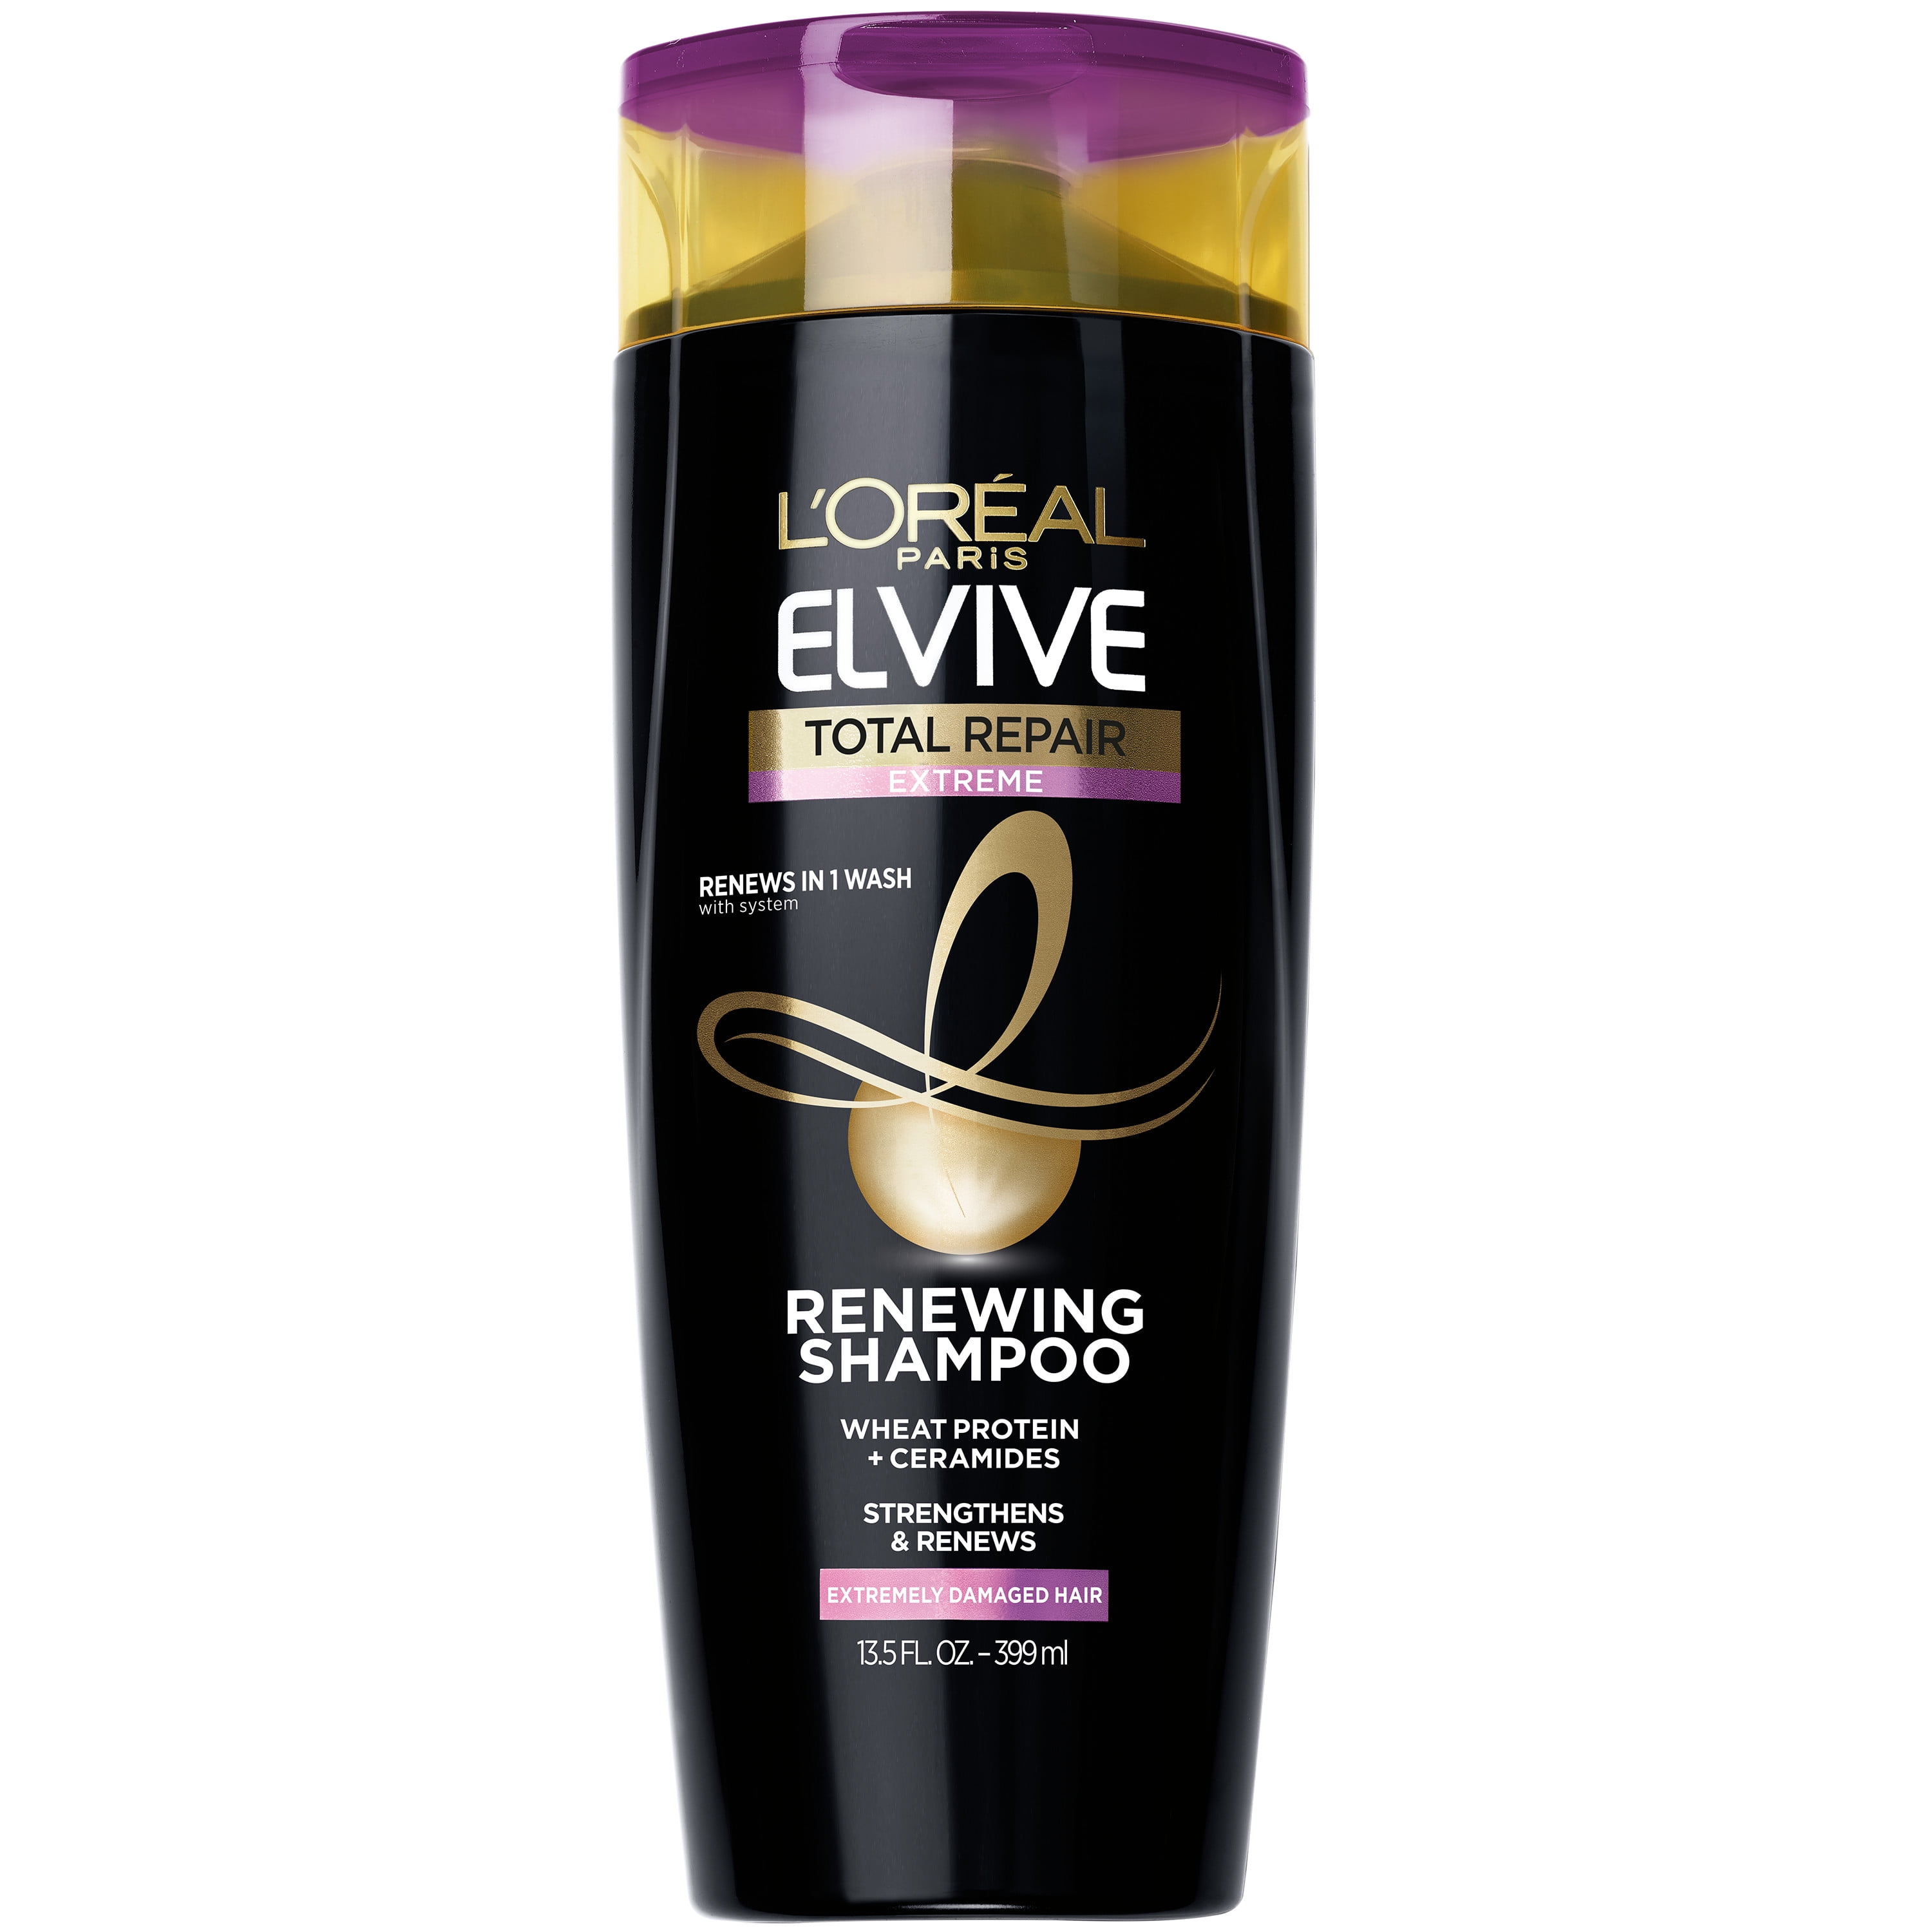 L'Oreal Paris Elvive Total Repair Extreme Renewing Shampoo for Damaged Hair, 13.5 fl oz